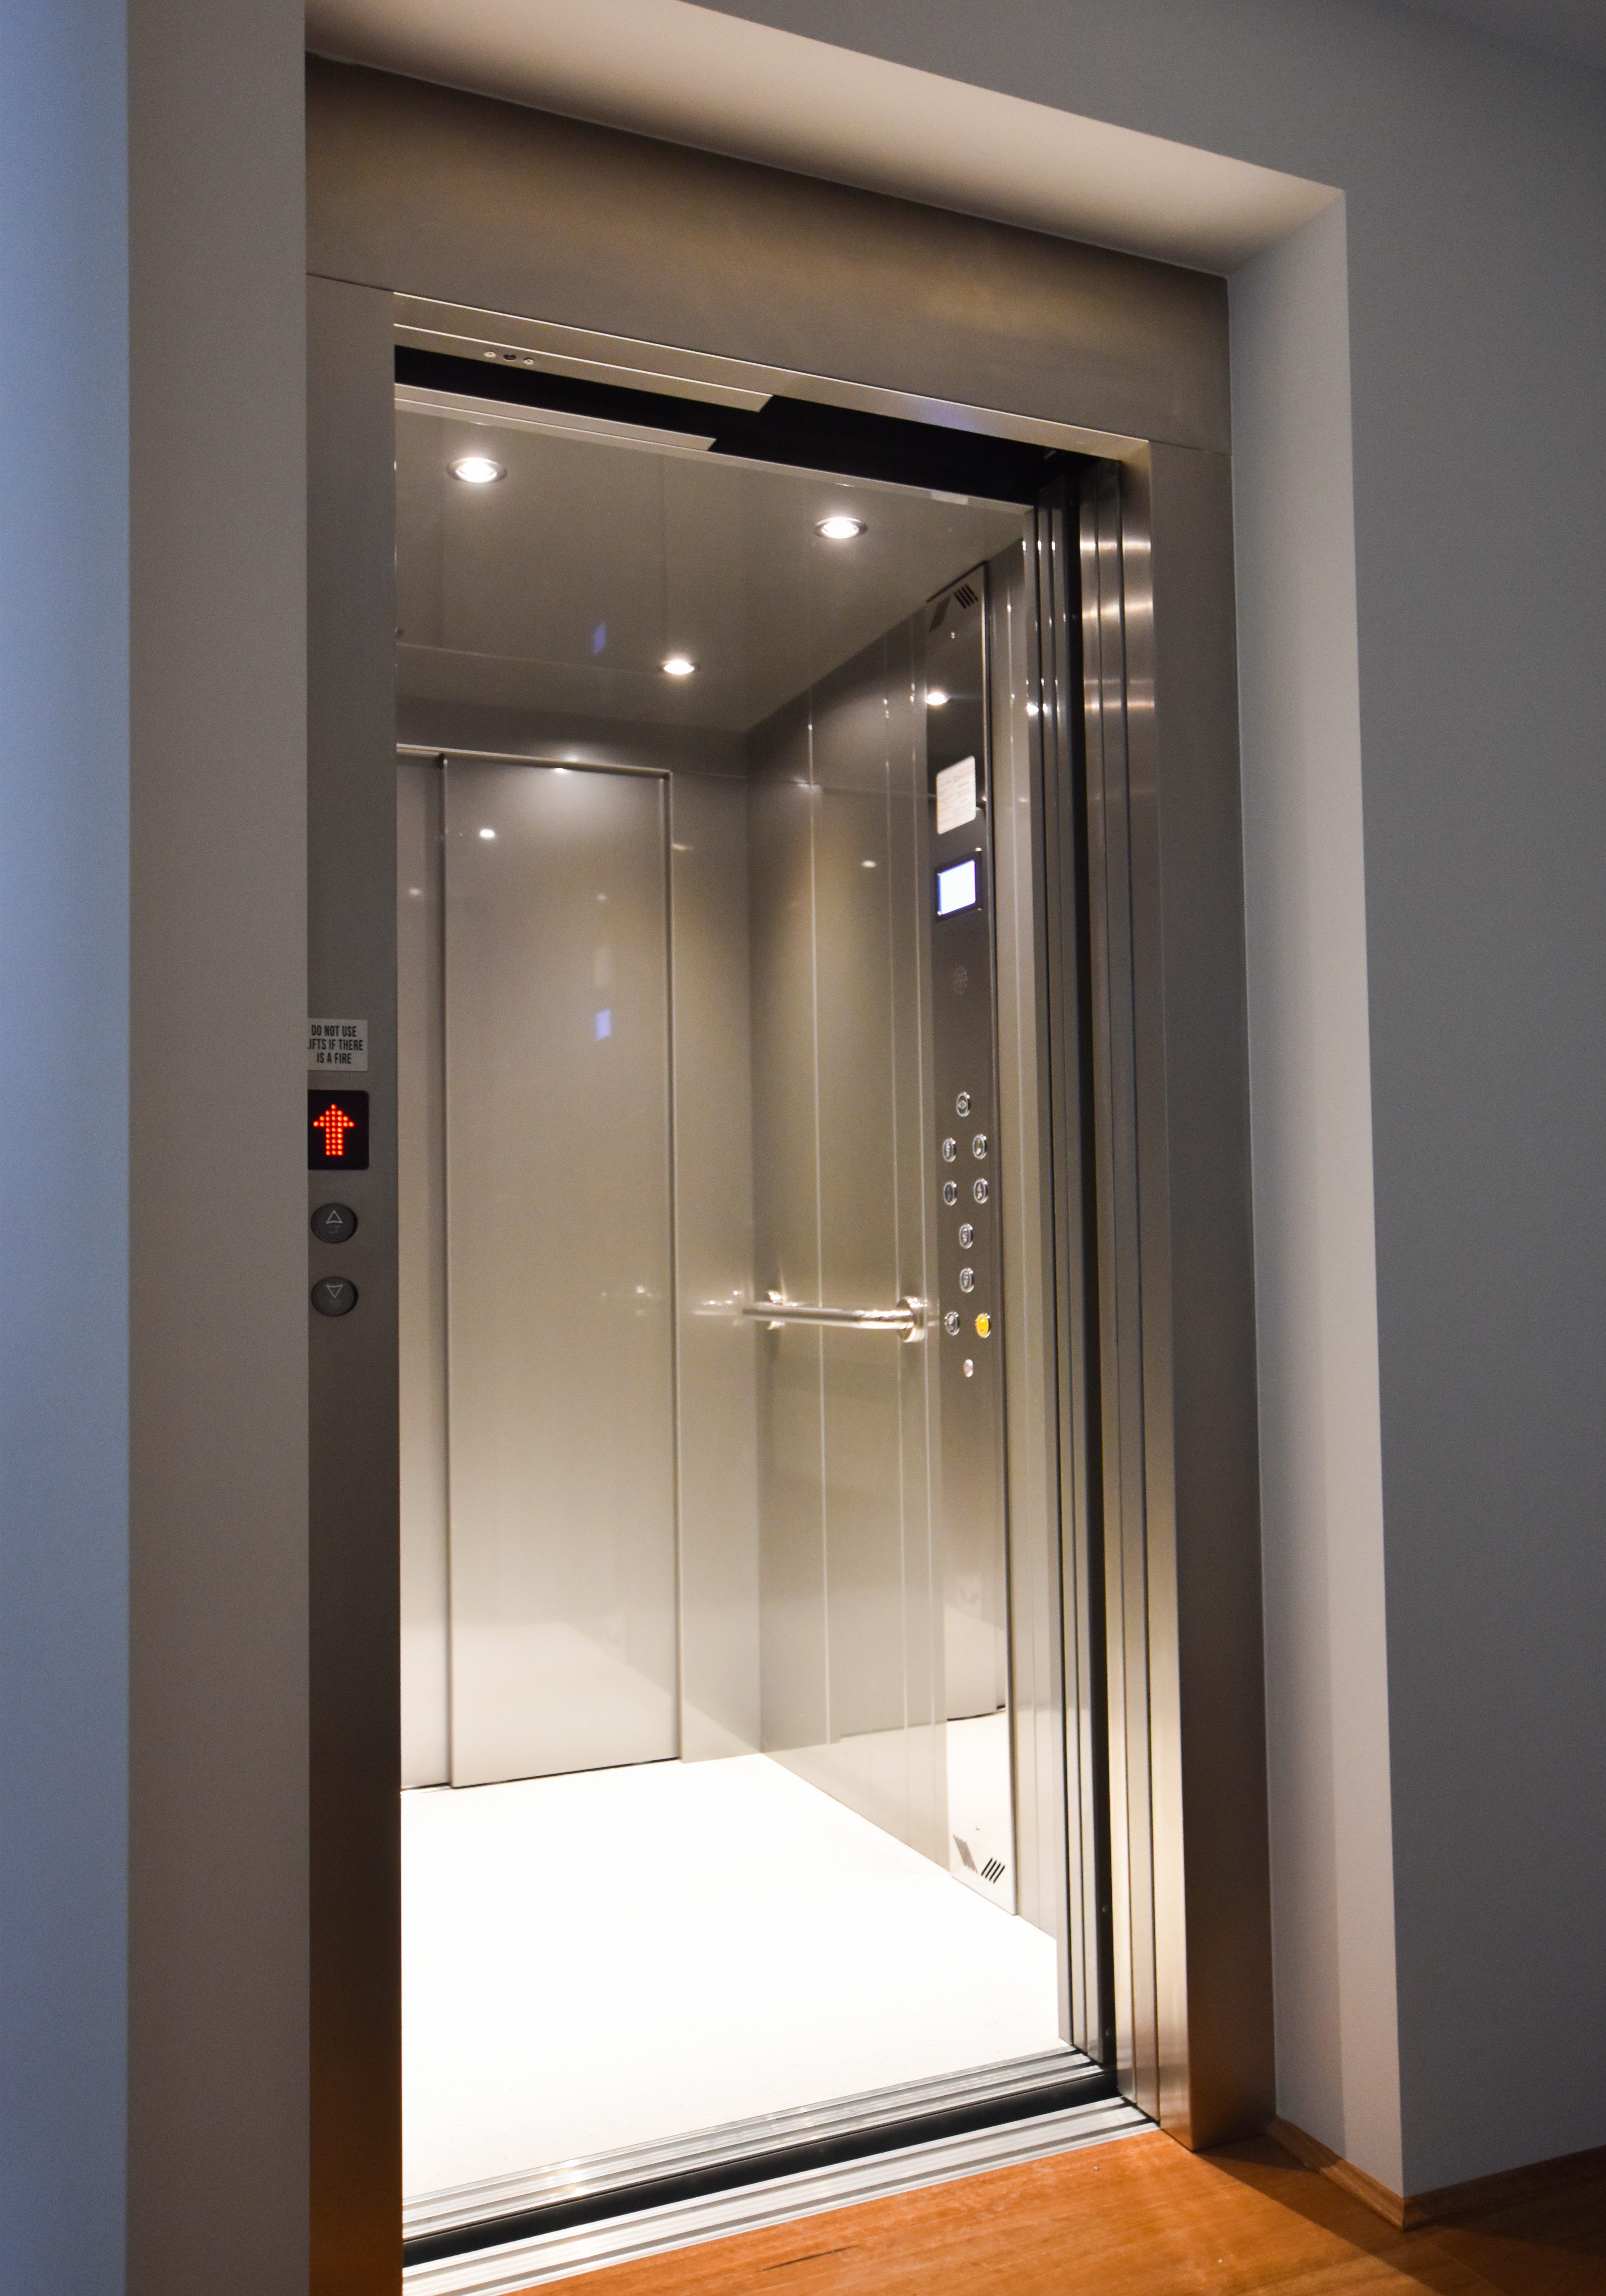 The Open door of the DDA compliant commercial lift in Floreat